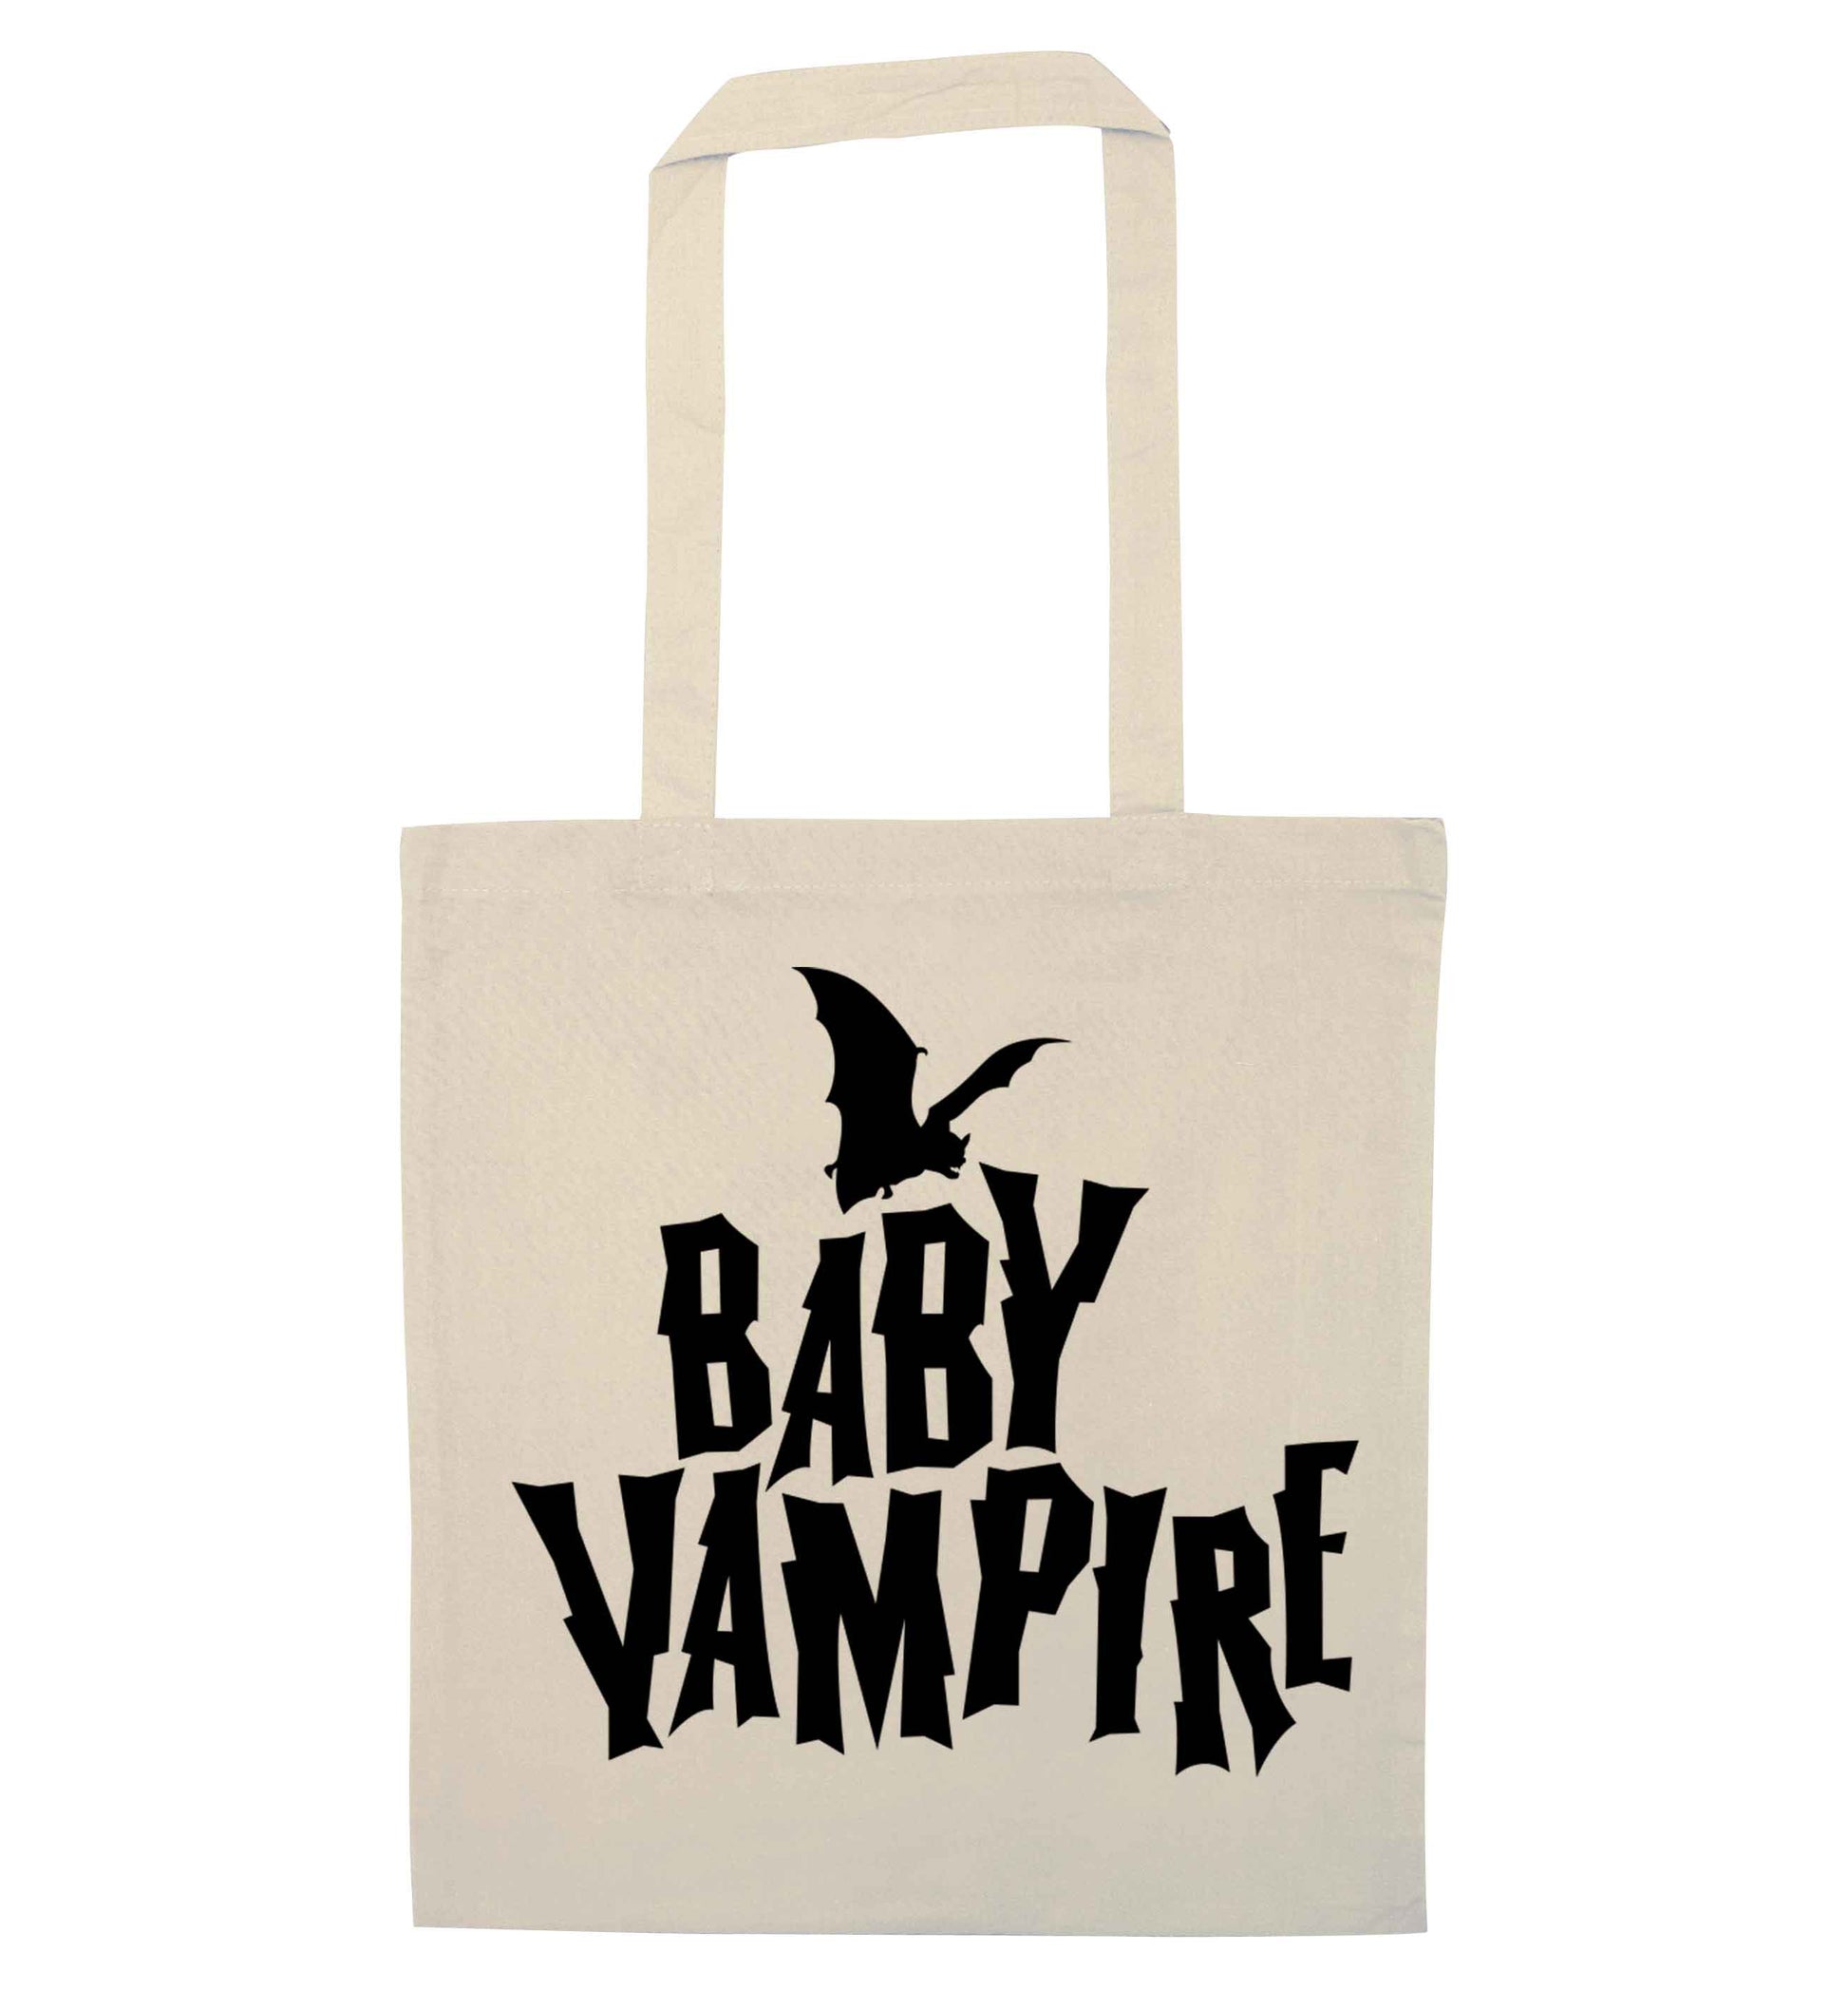 Baby vampire natural tote bag